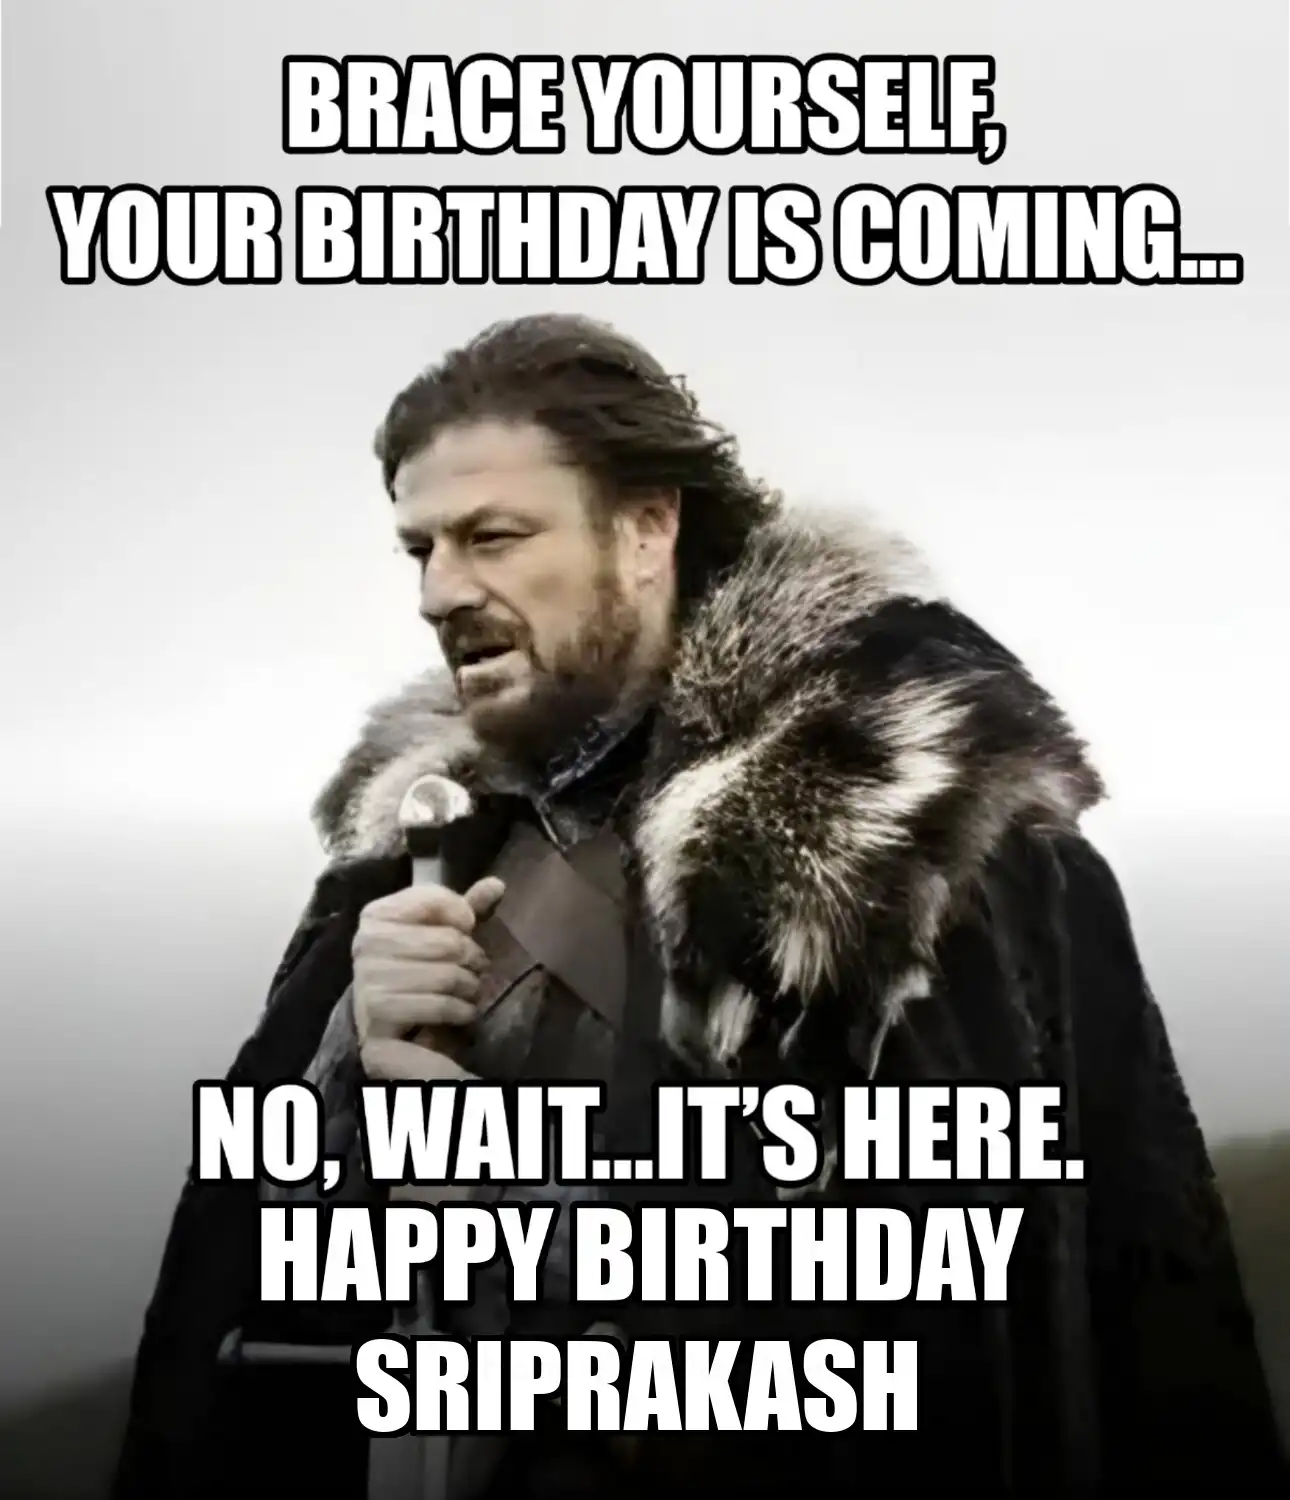 Happy Birthday Sriprakash Brace Yourself Your Birthday Is Coming Meme